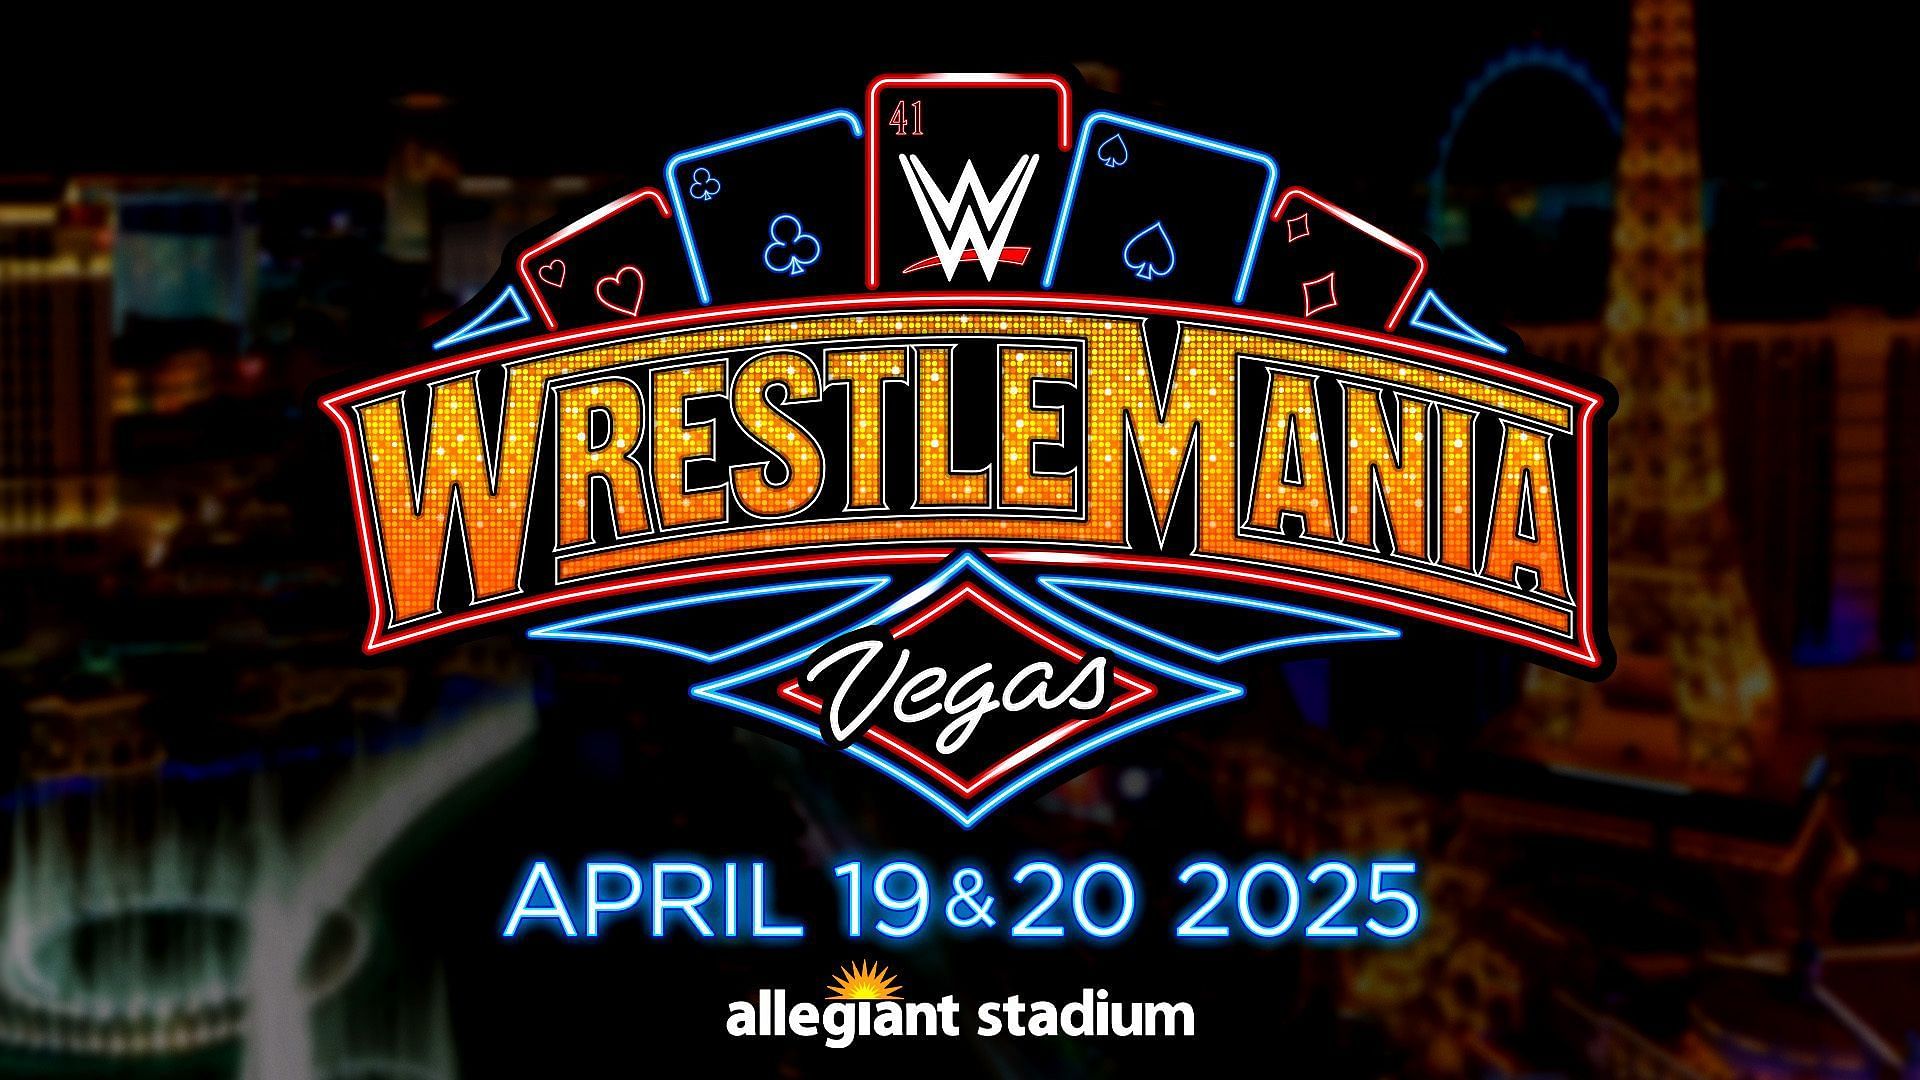 The official logo for WWE WrestleMania 41 aka WrestleMania Vegas